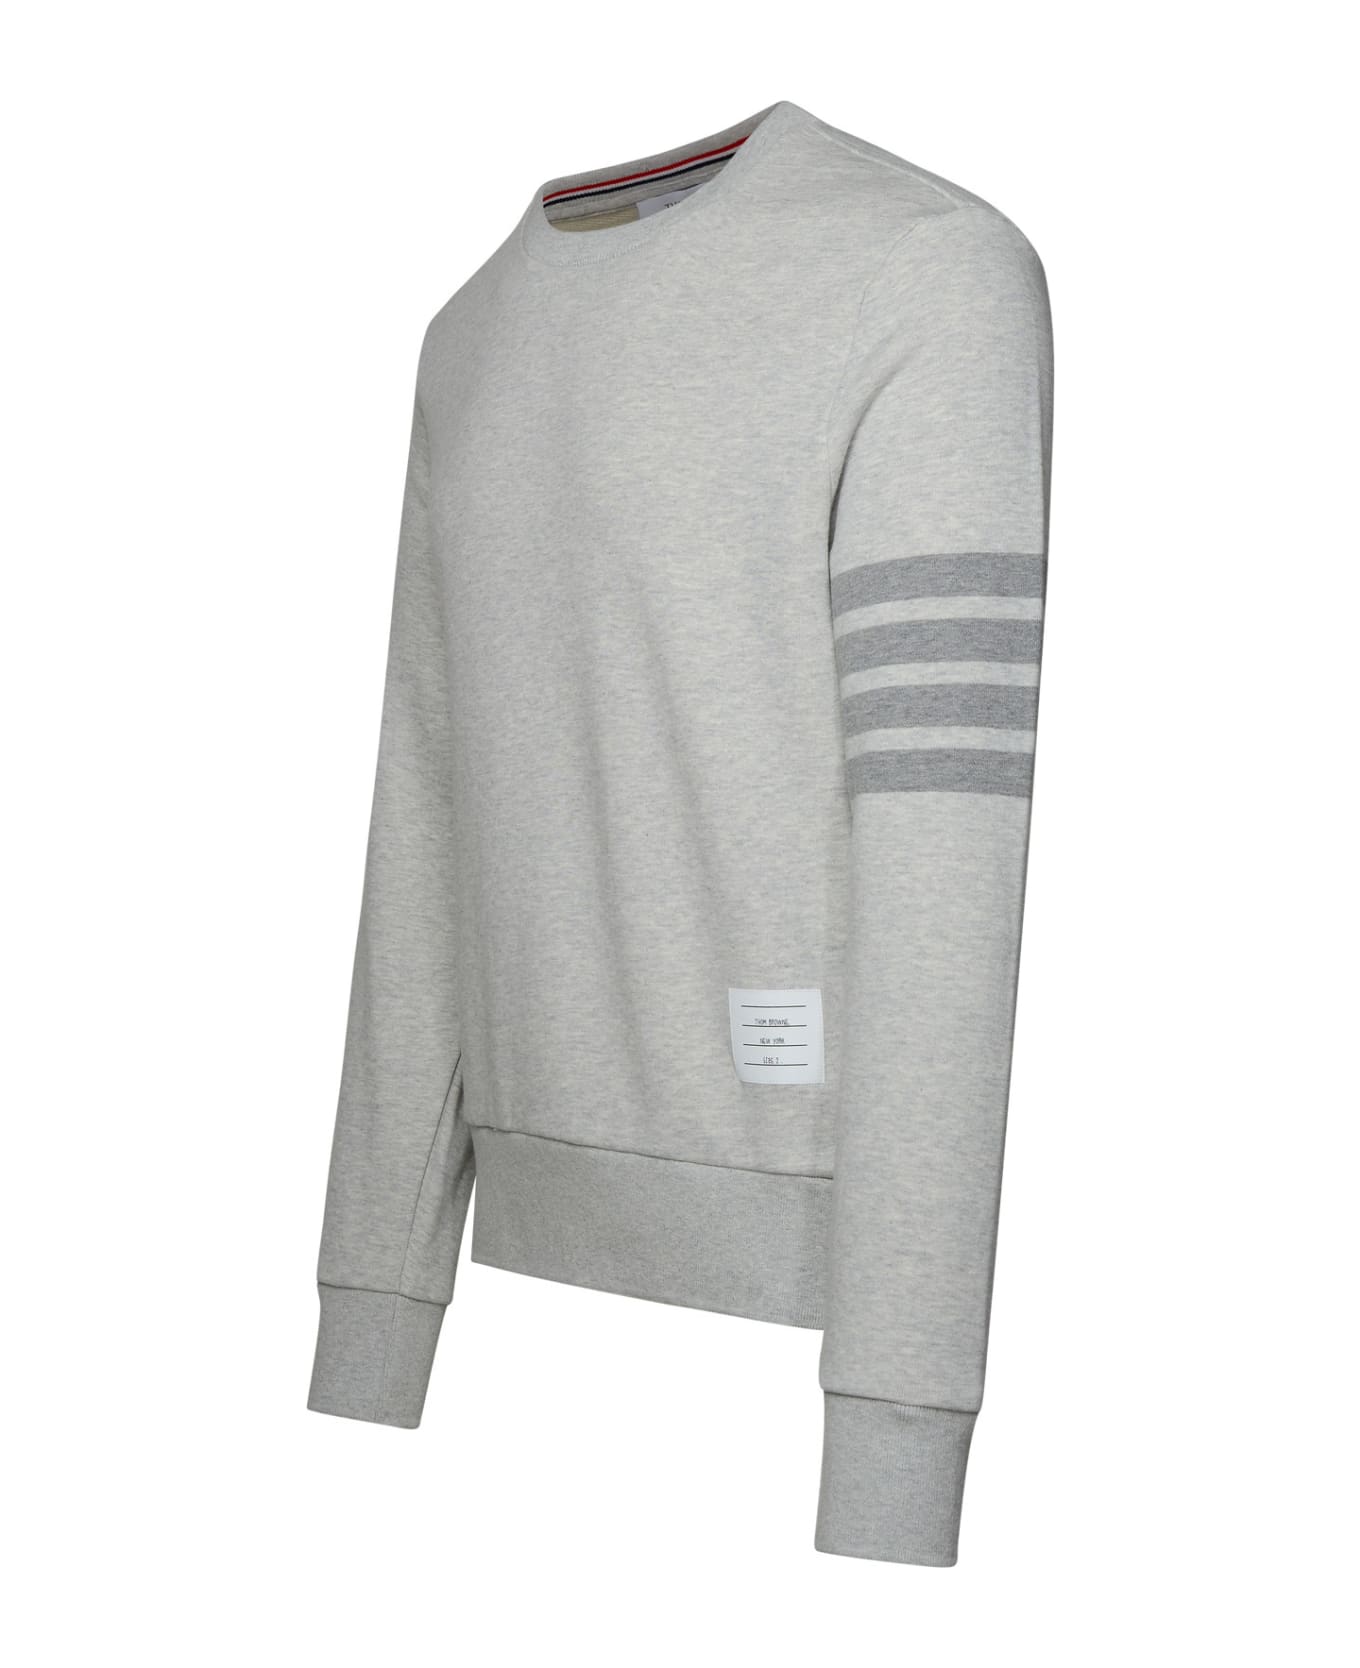 Thom Browne Gray Cotton Sweatshirt - Pastel Grey フリース